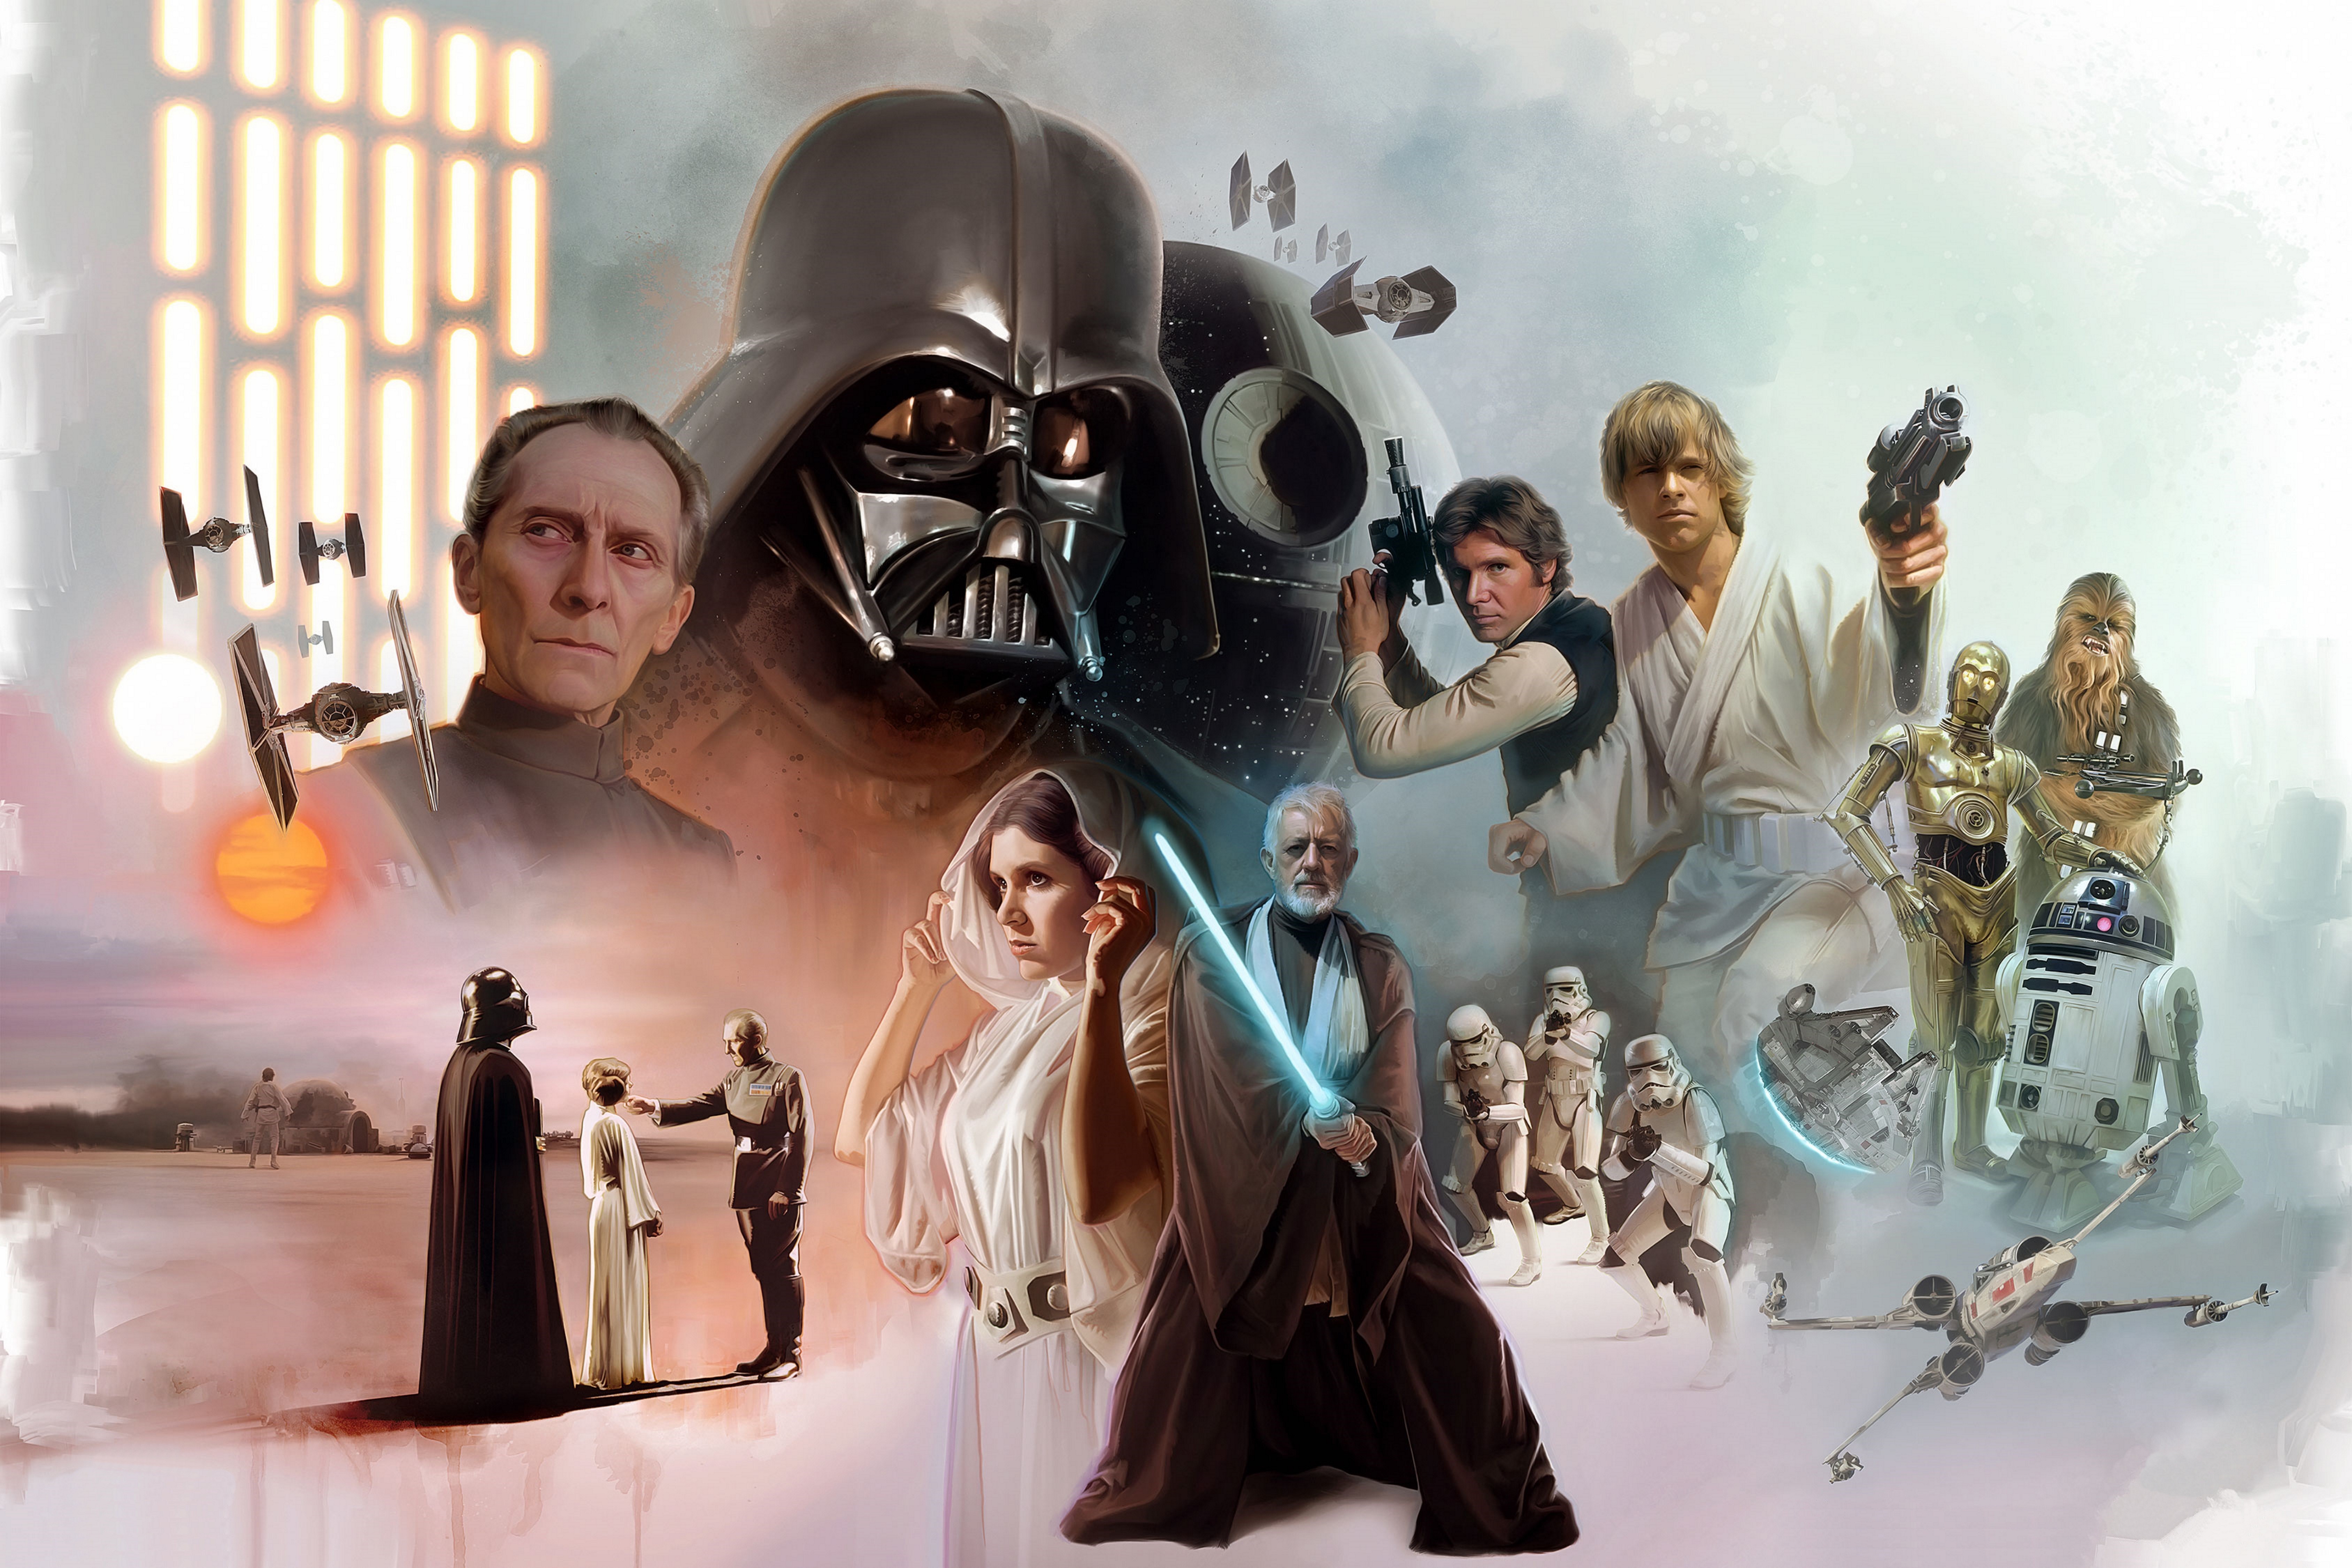 C 3po Chewbacca Darth Vader Death Star Han Solo Luke Skywalker Obi Wan Kenobi Princess Leia R2 D2 St 6750x4500